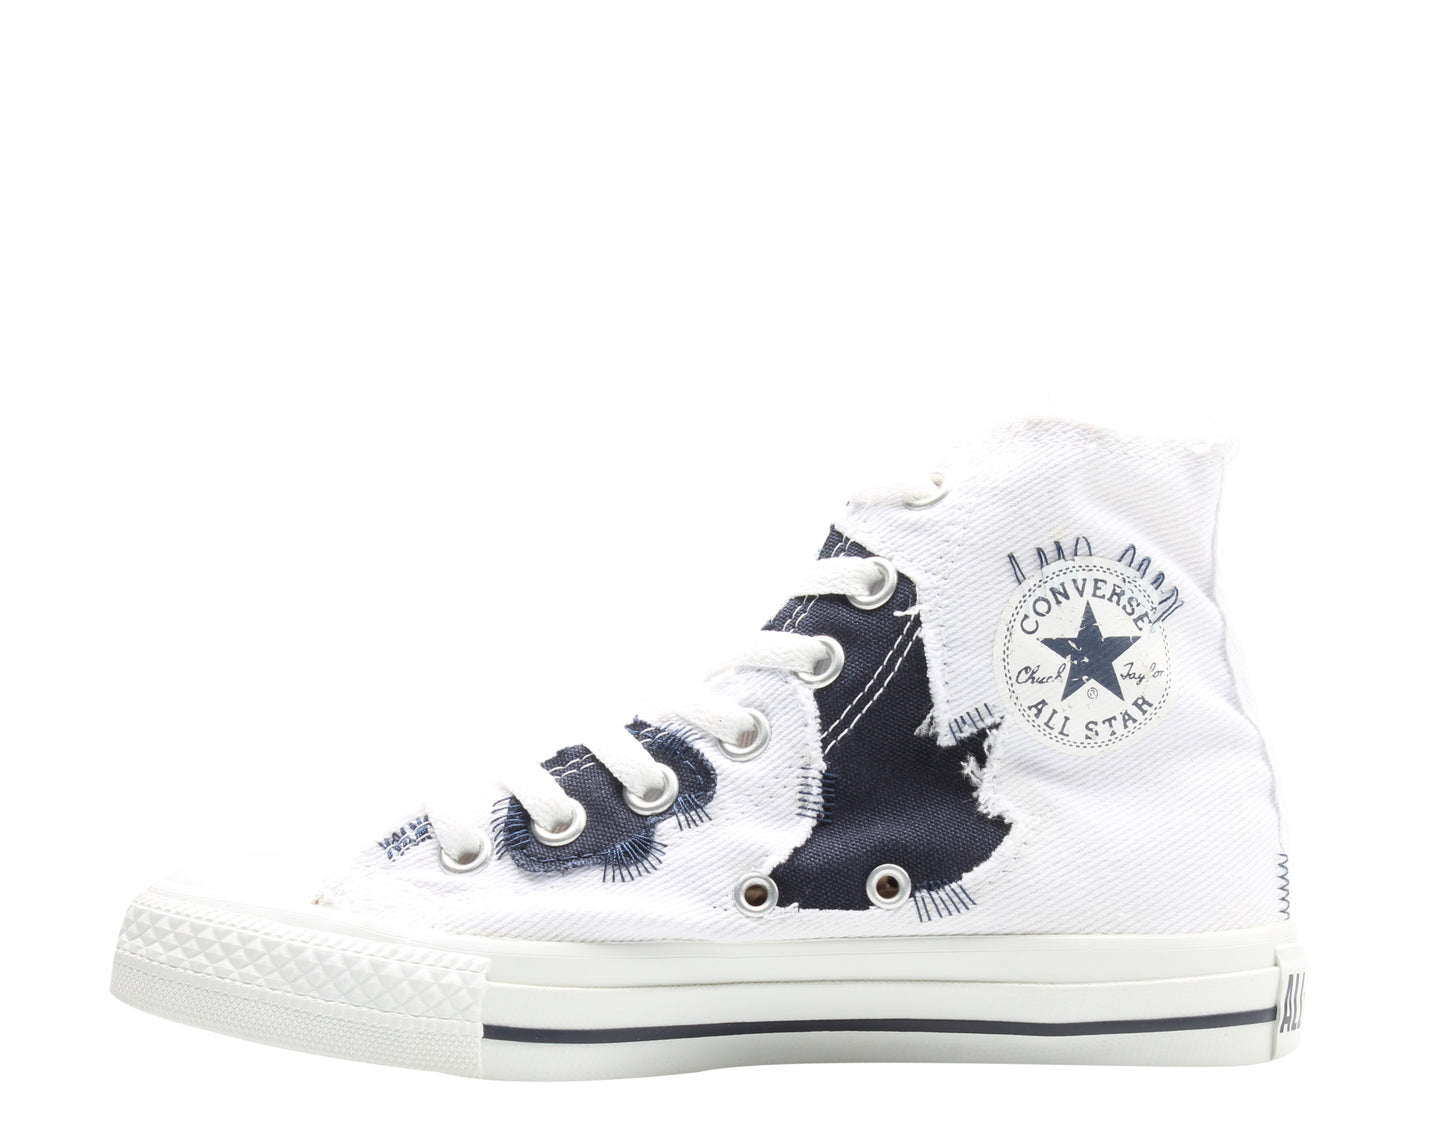 Converse Chuck Taylor All Star Denim Stitch White/Indigo High Top Sneakers 1X069